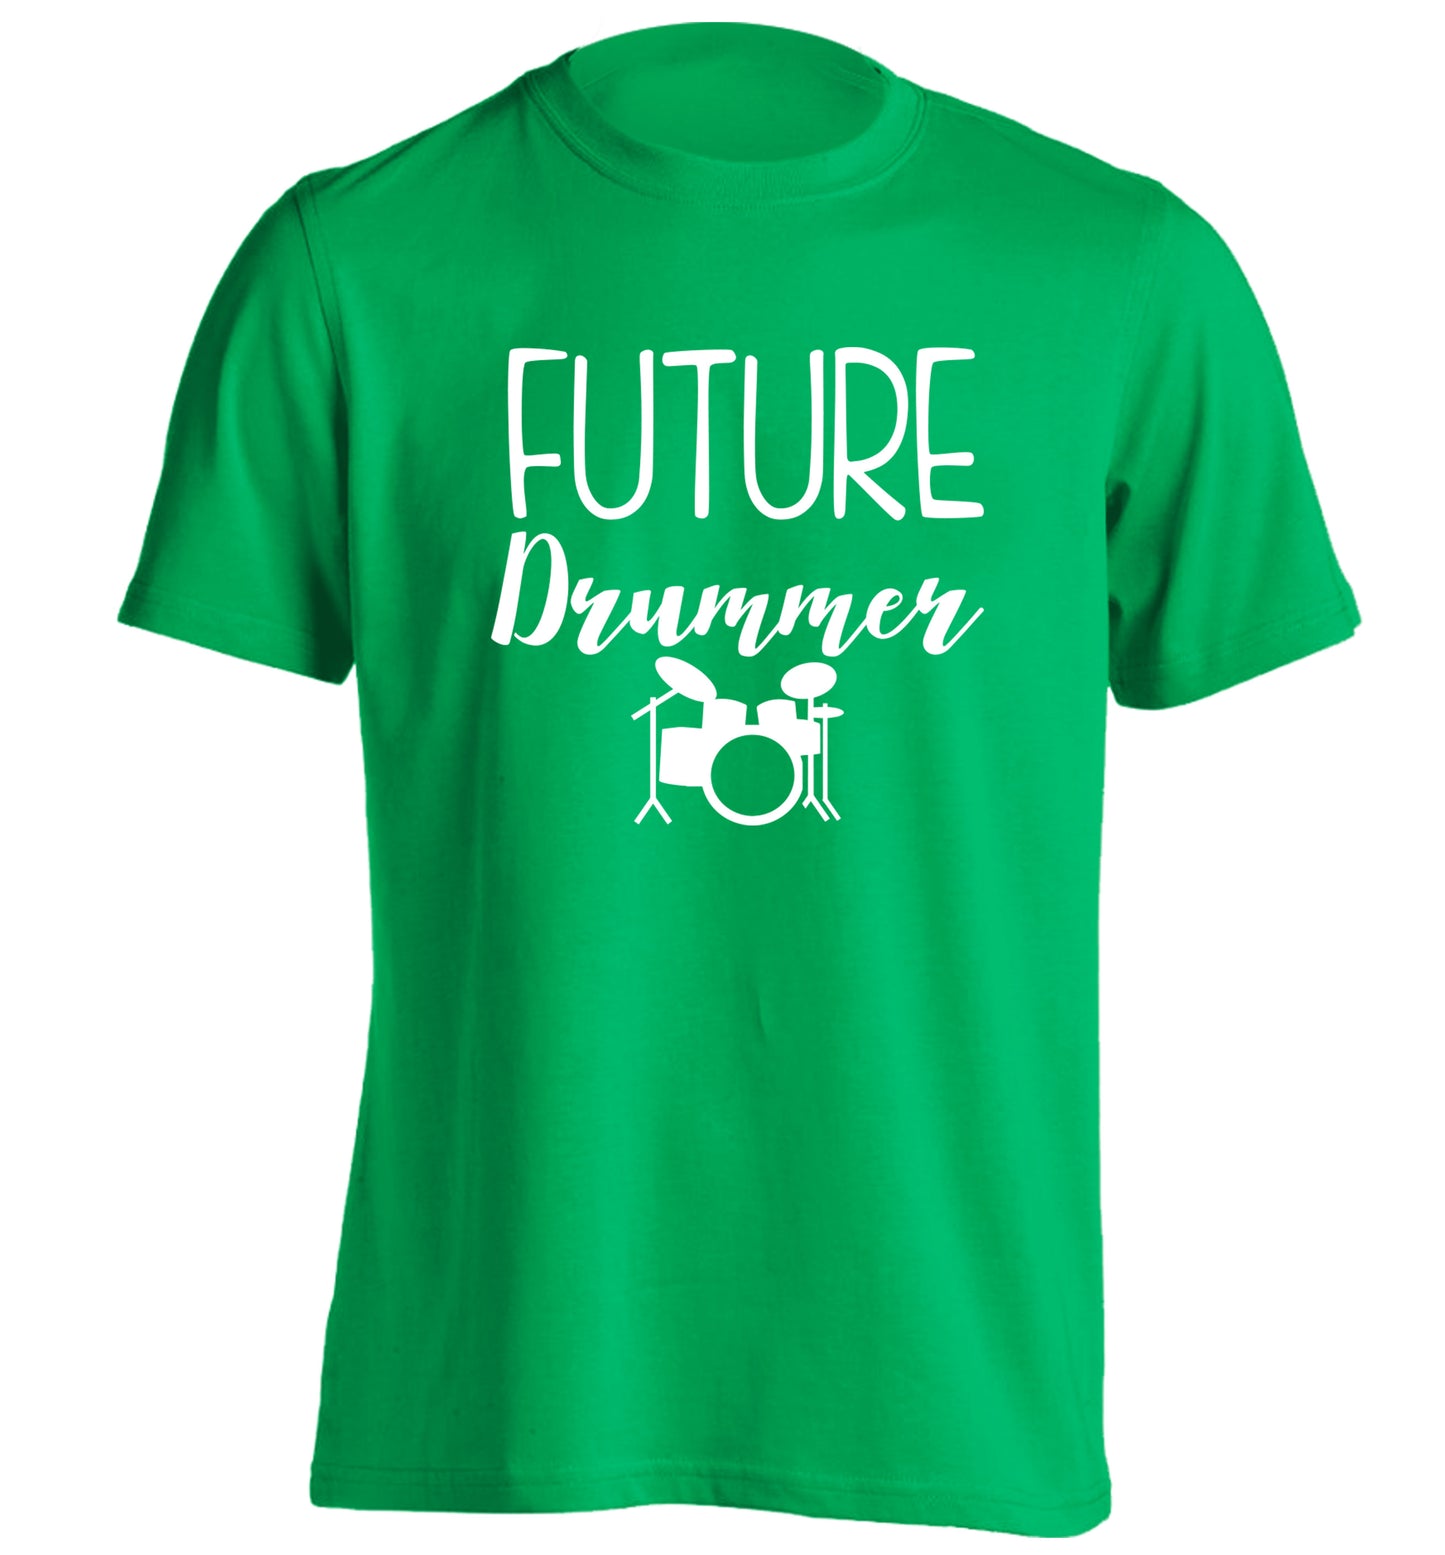 Future drummer adults unisex green Tshirt 2XL